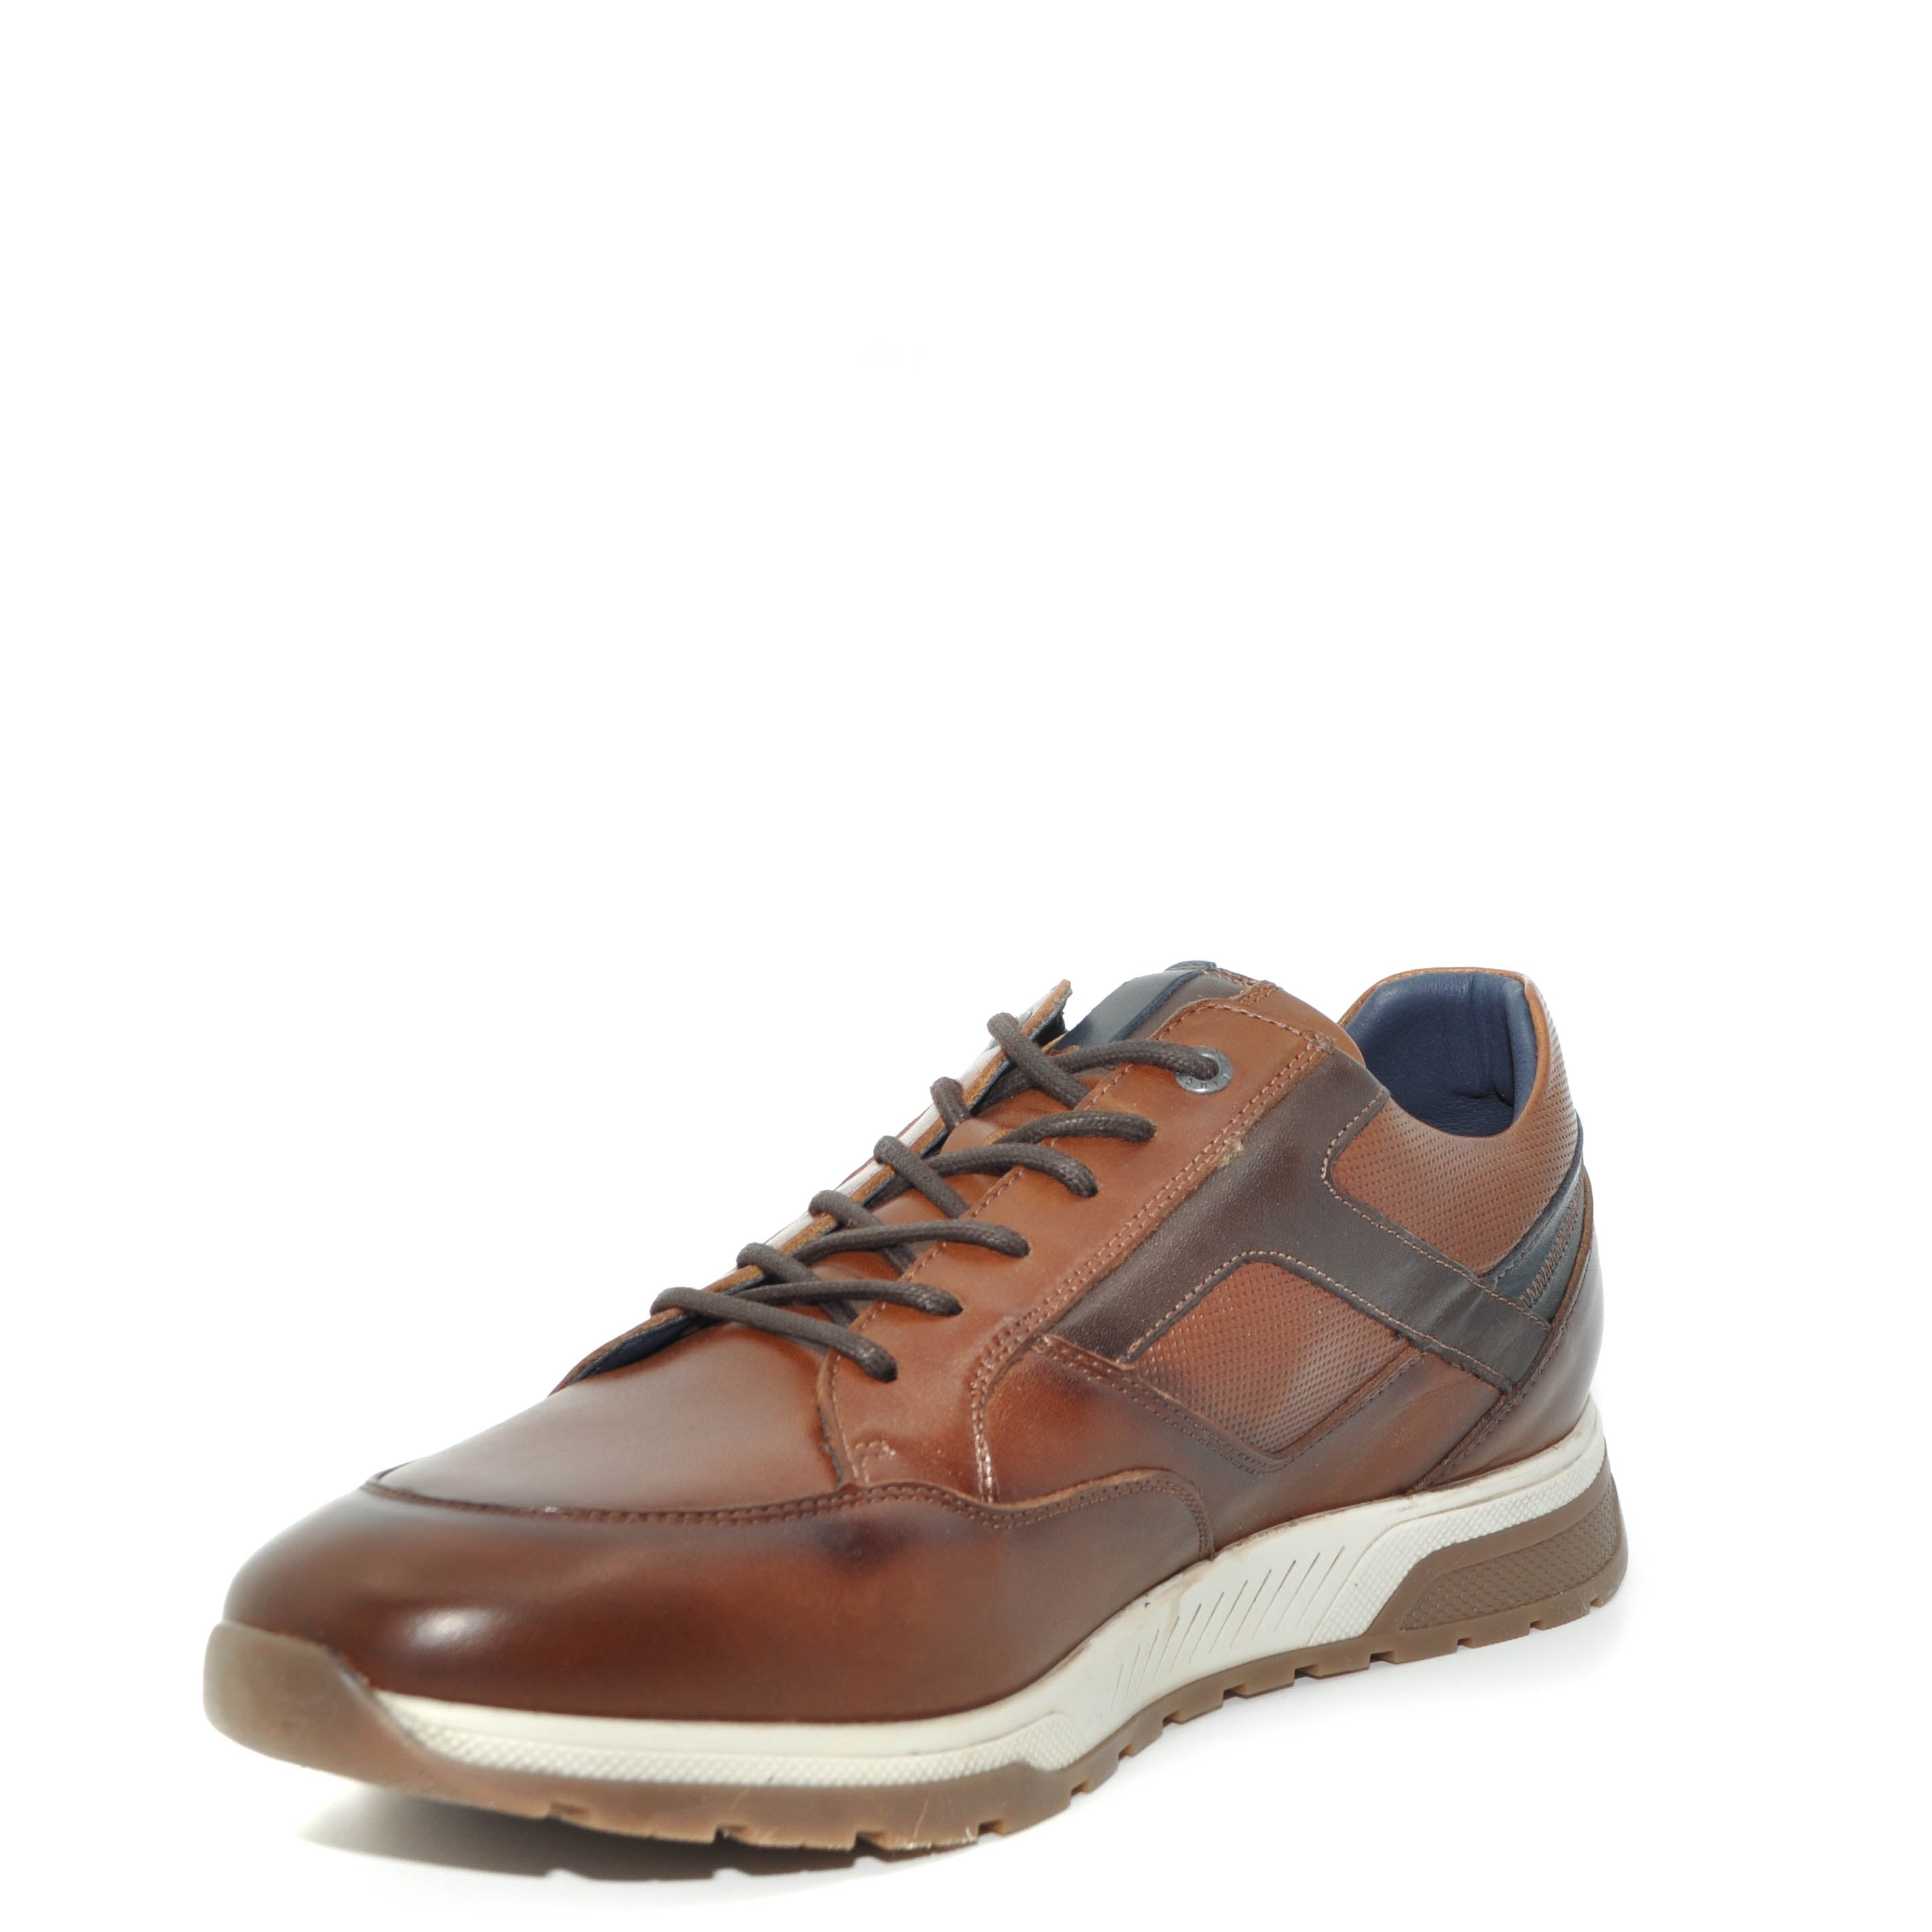 fluchos brown leather shoes